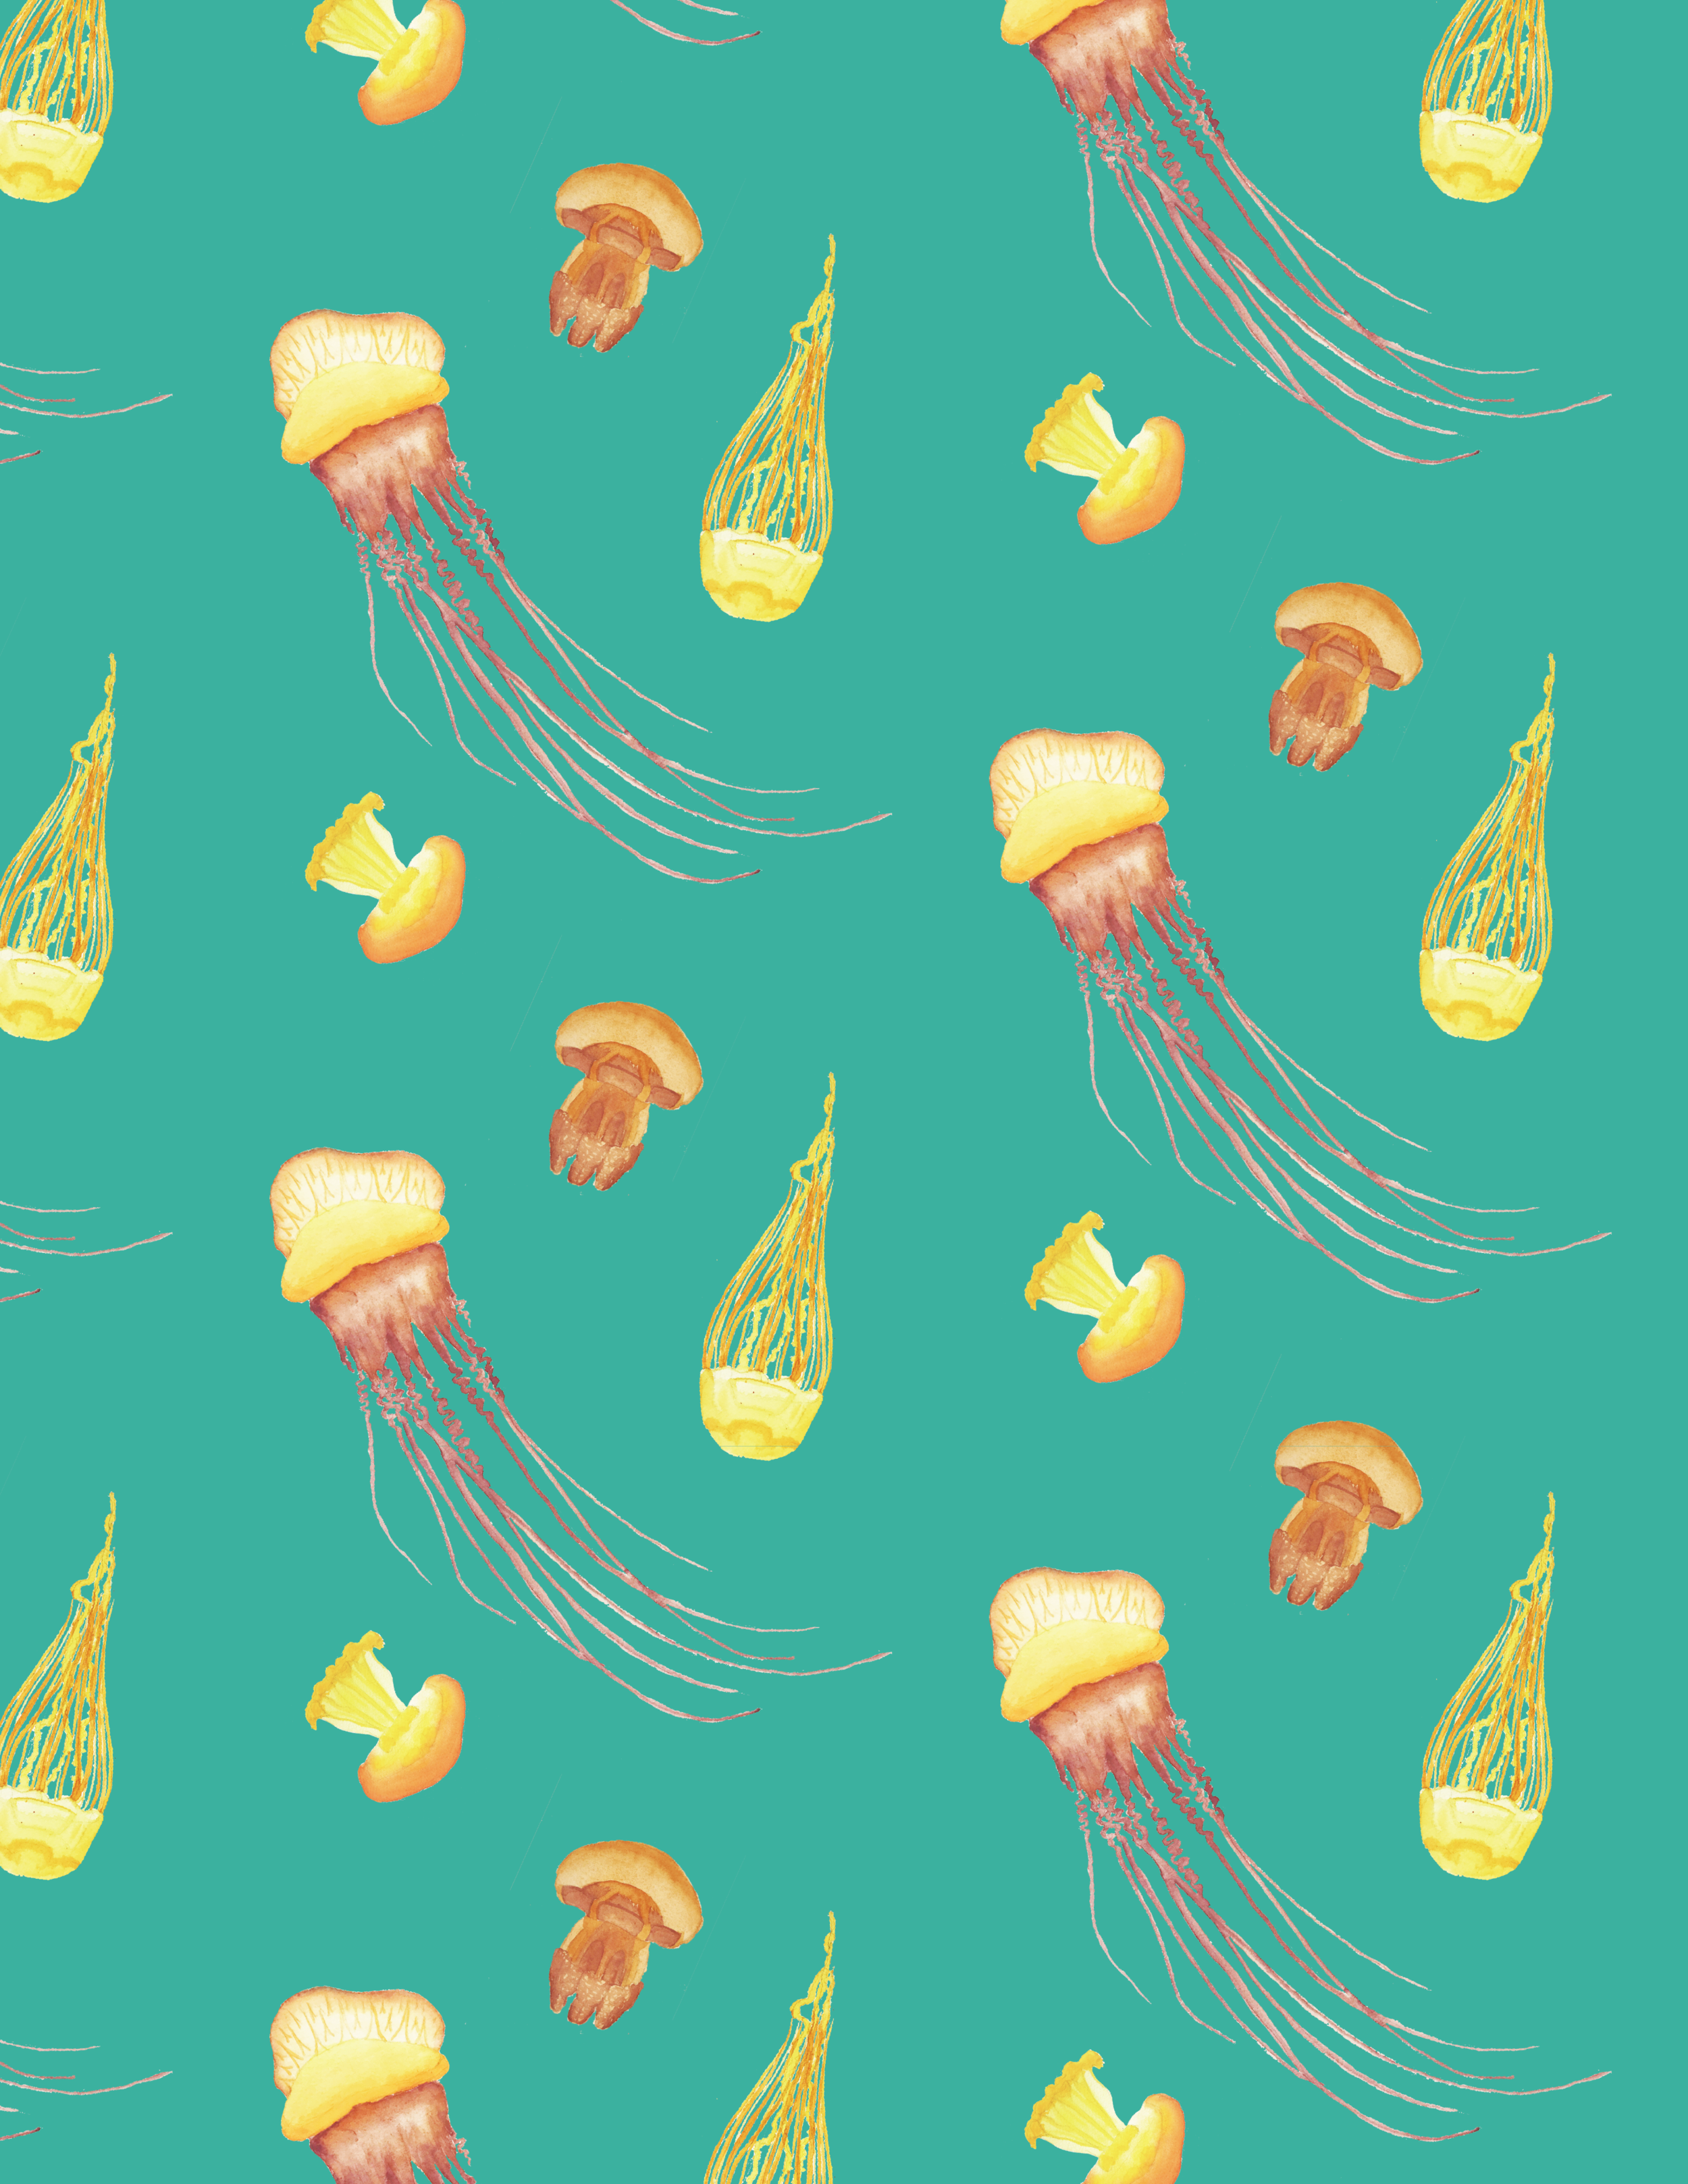 jellyfish wallpaper aqua-01.png